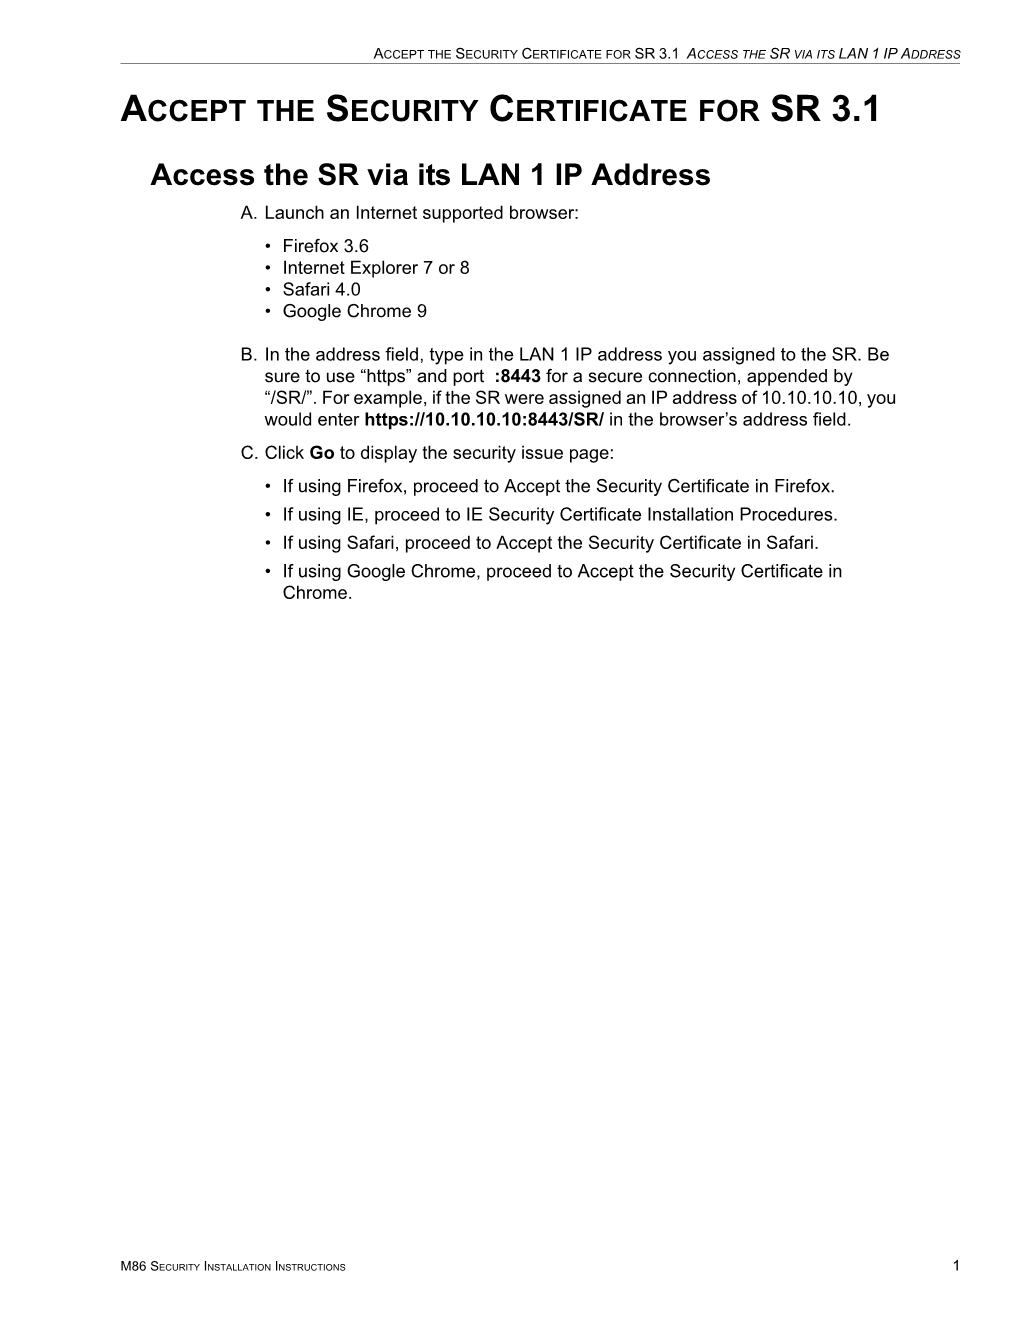 Sr 3.1 Access the Sr Via Its Lan 1 Ip Address